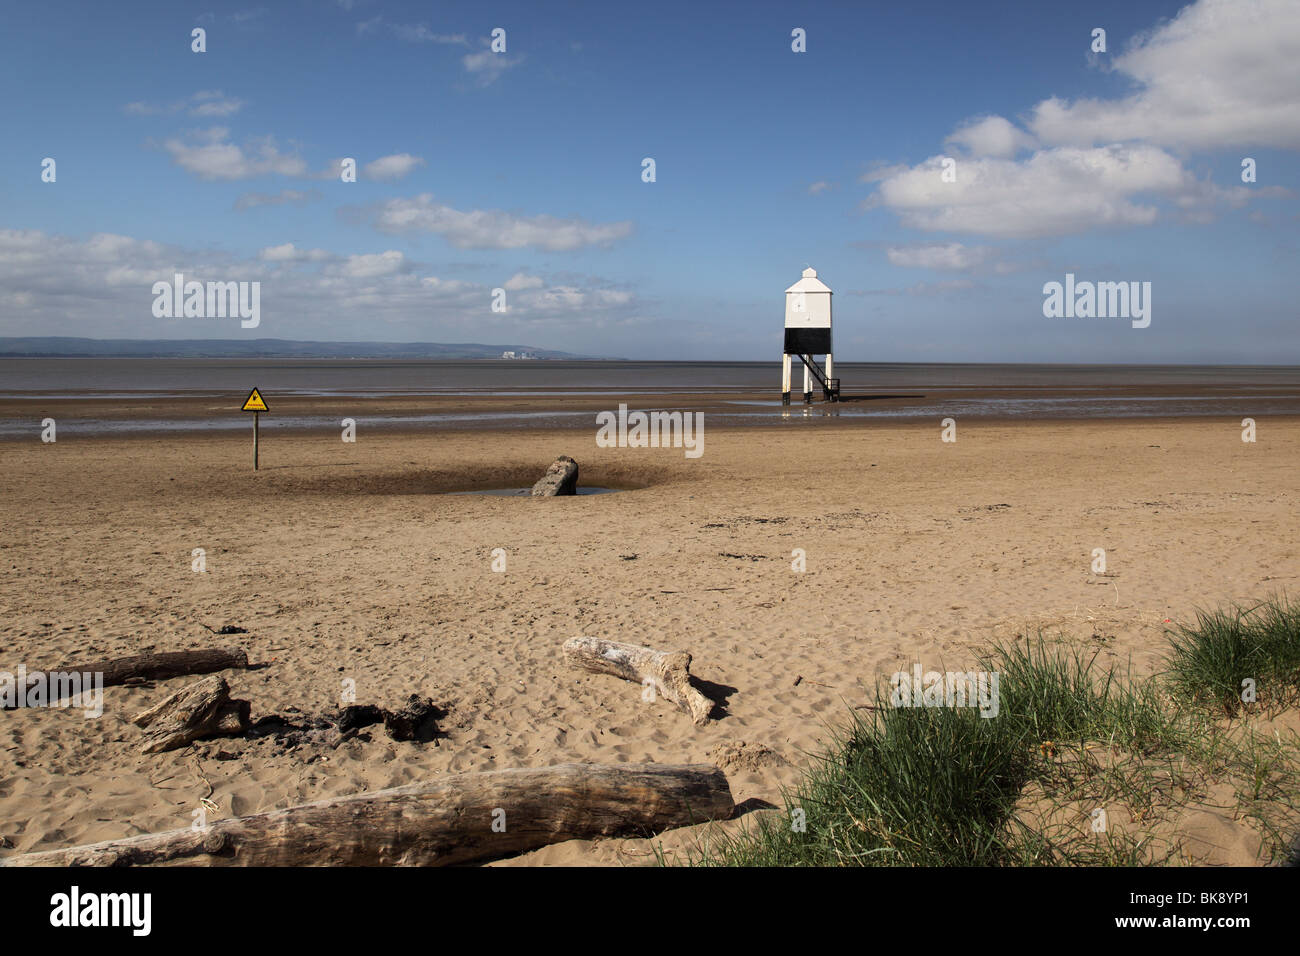 The white wooden Lighthouse on stilts at Burnham on Sea, Somerset, England Stock Photo